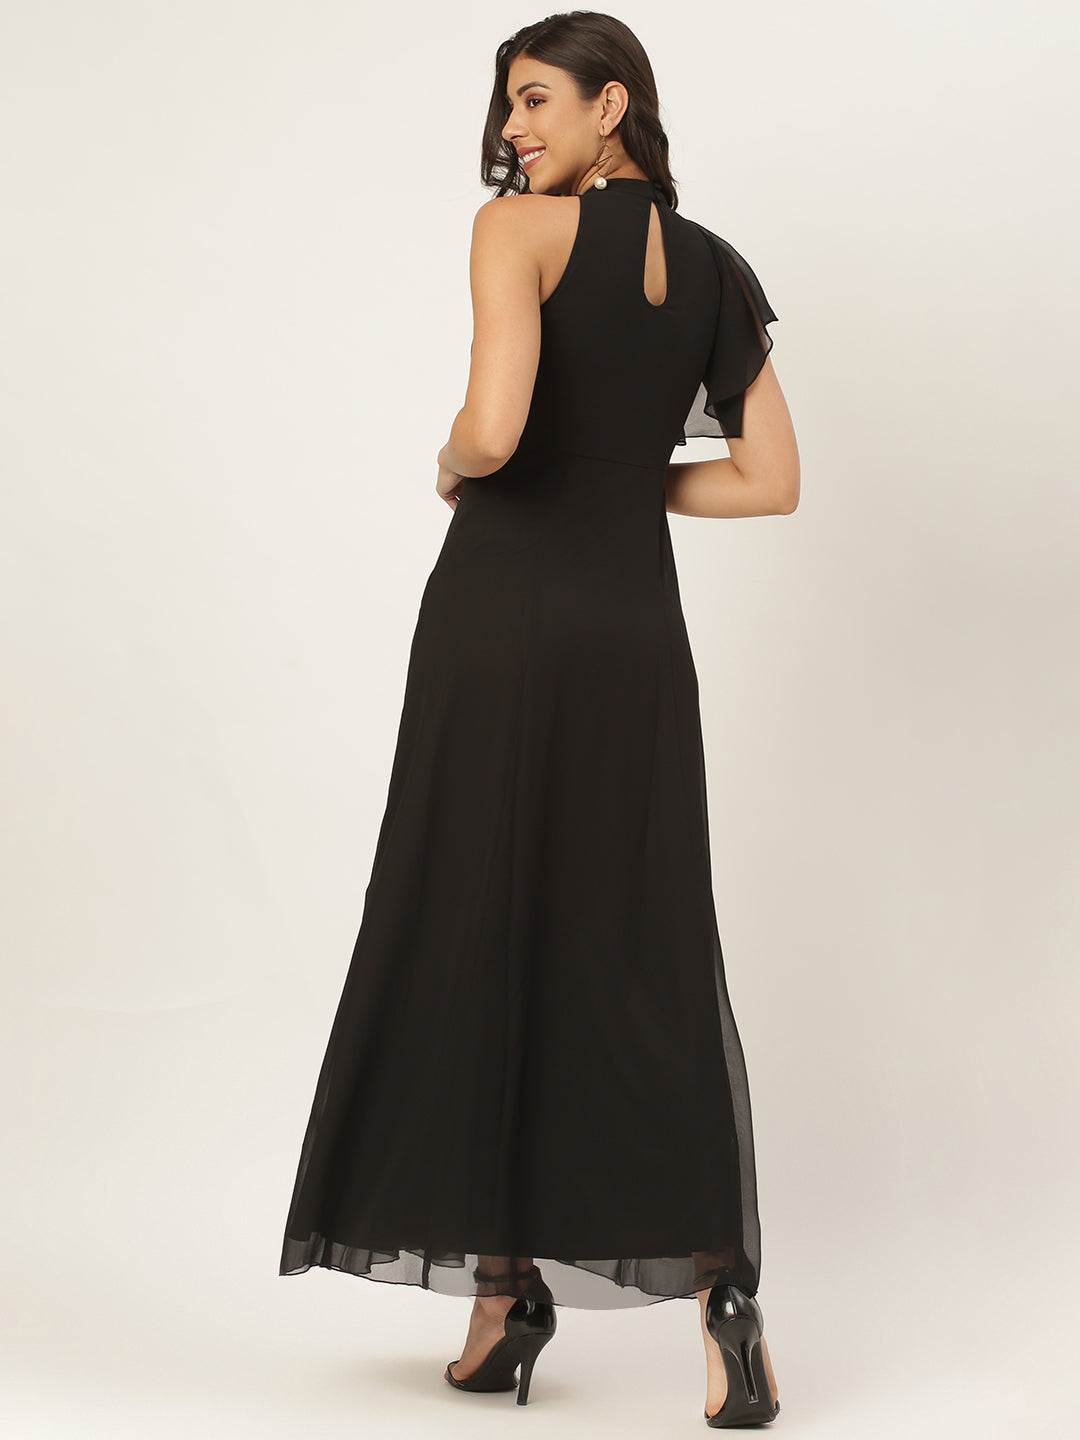 Black Solid Maxi Dress with Embellished Neck